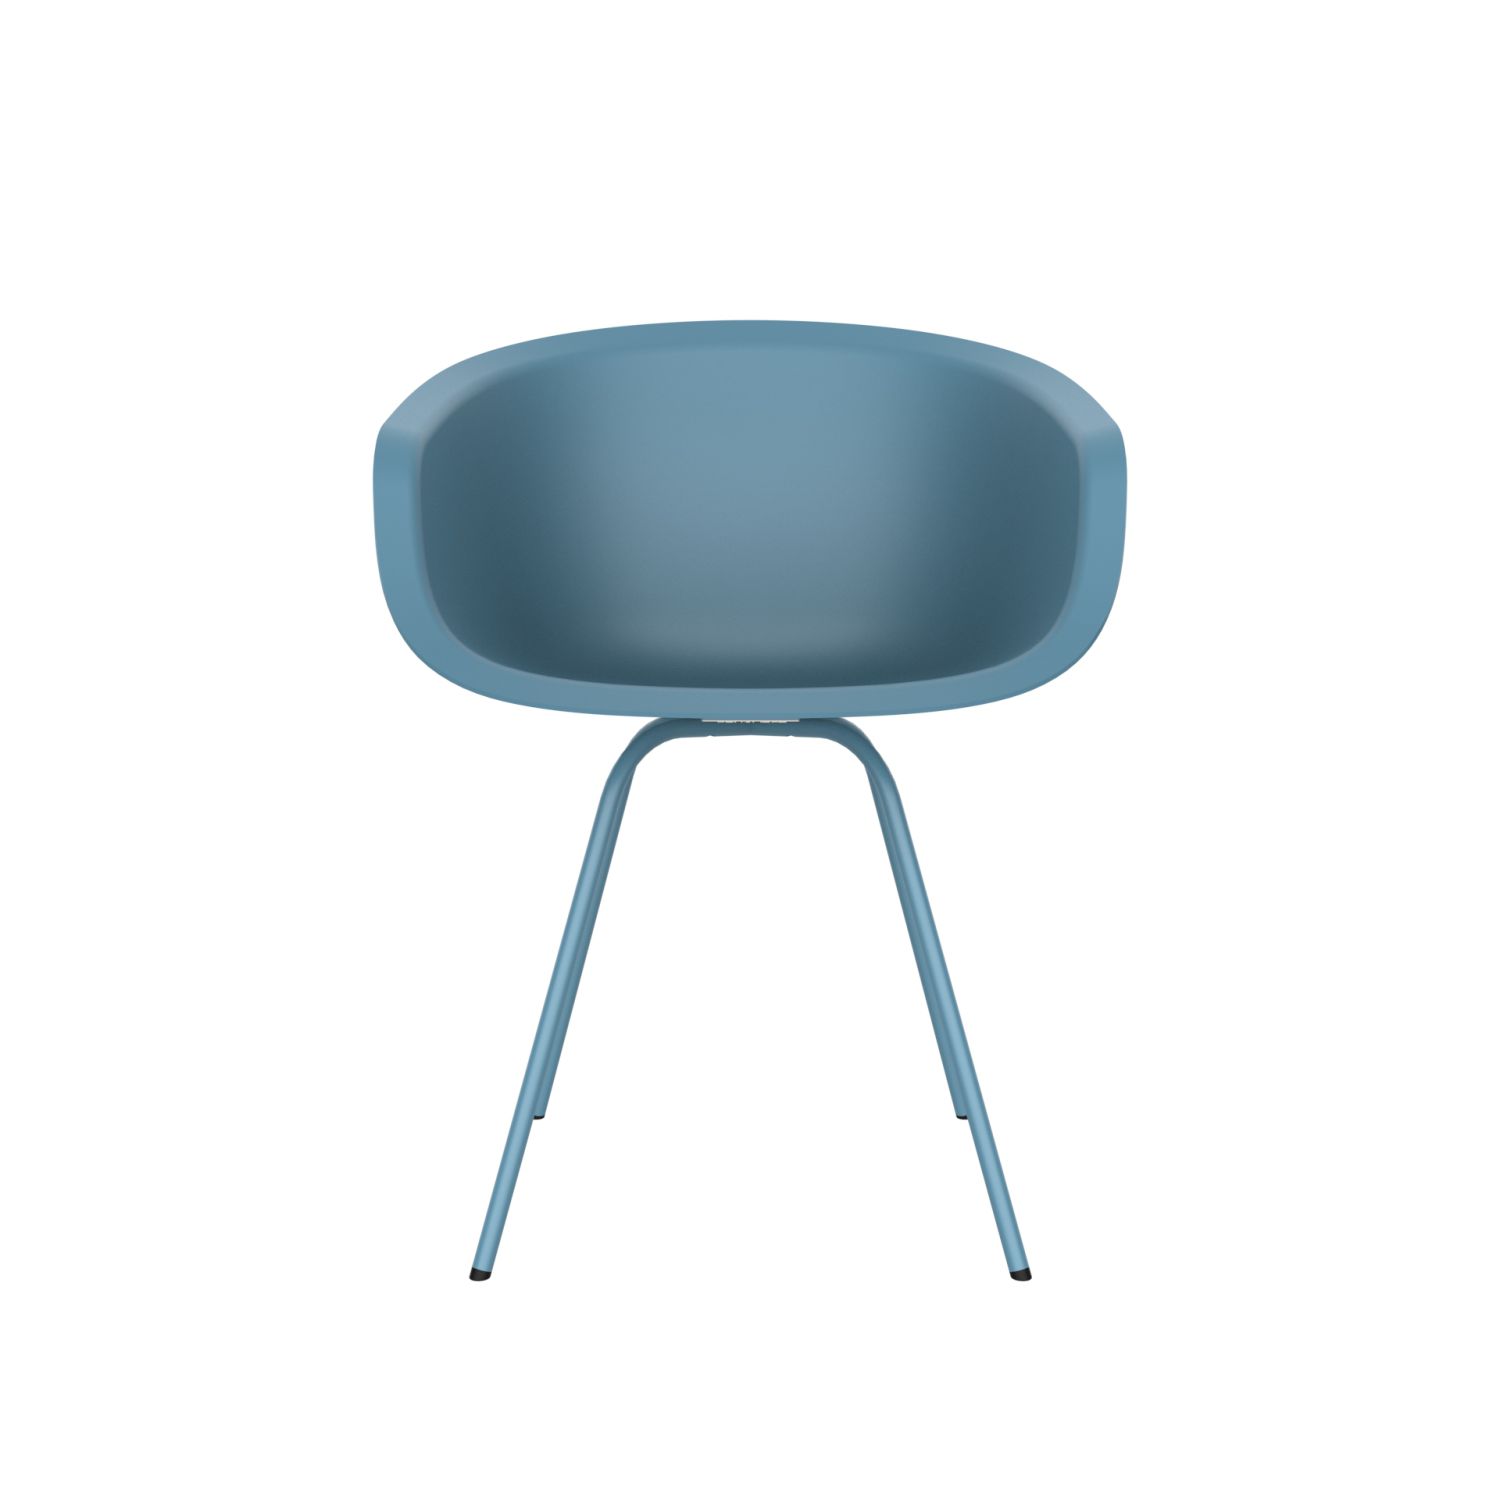 lensvelt richard hutten this bucket chair with steel base blue ral5024 blue ral5024 hard leg ends